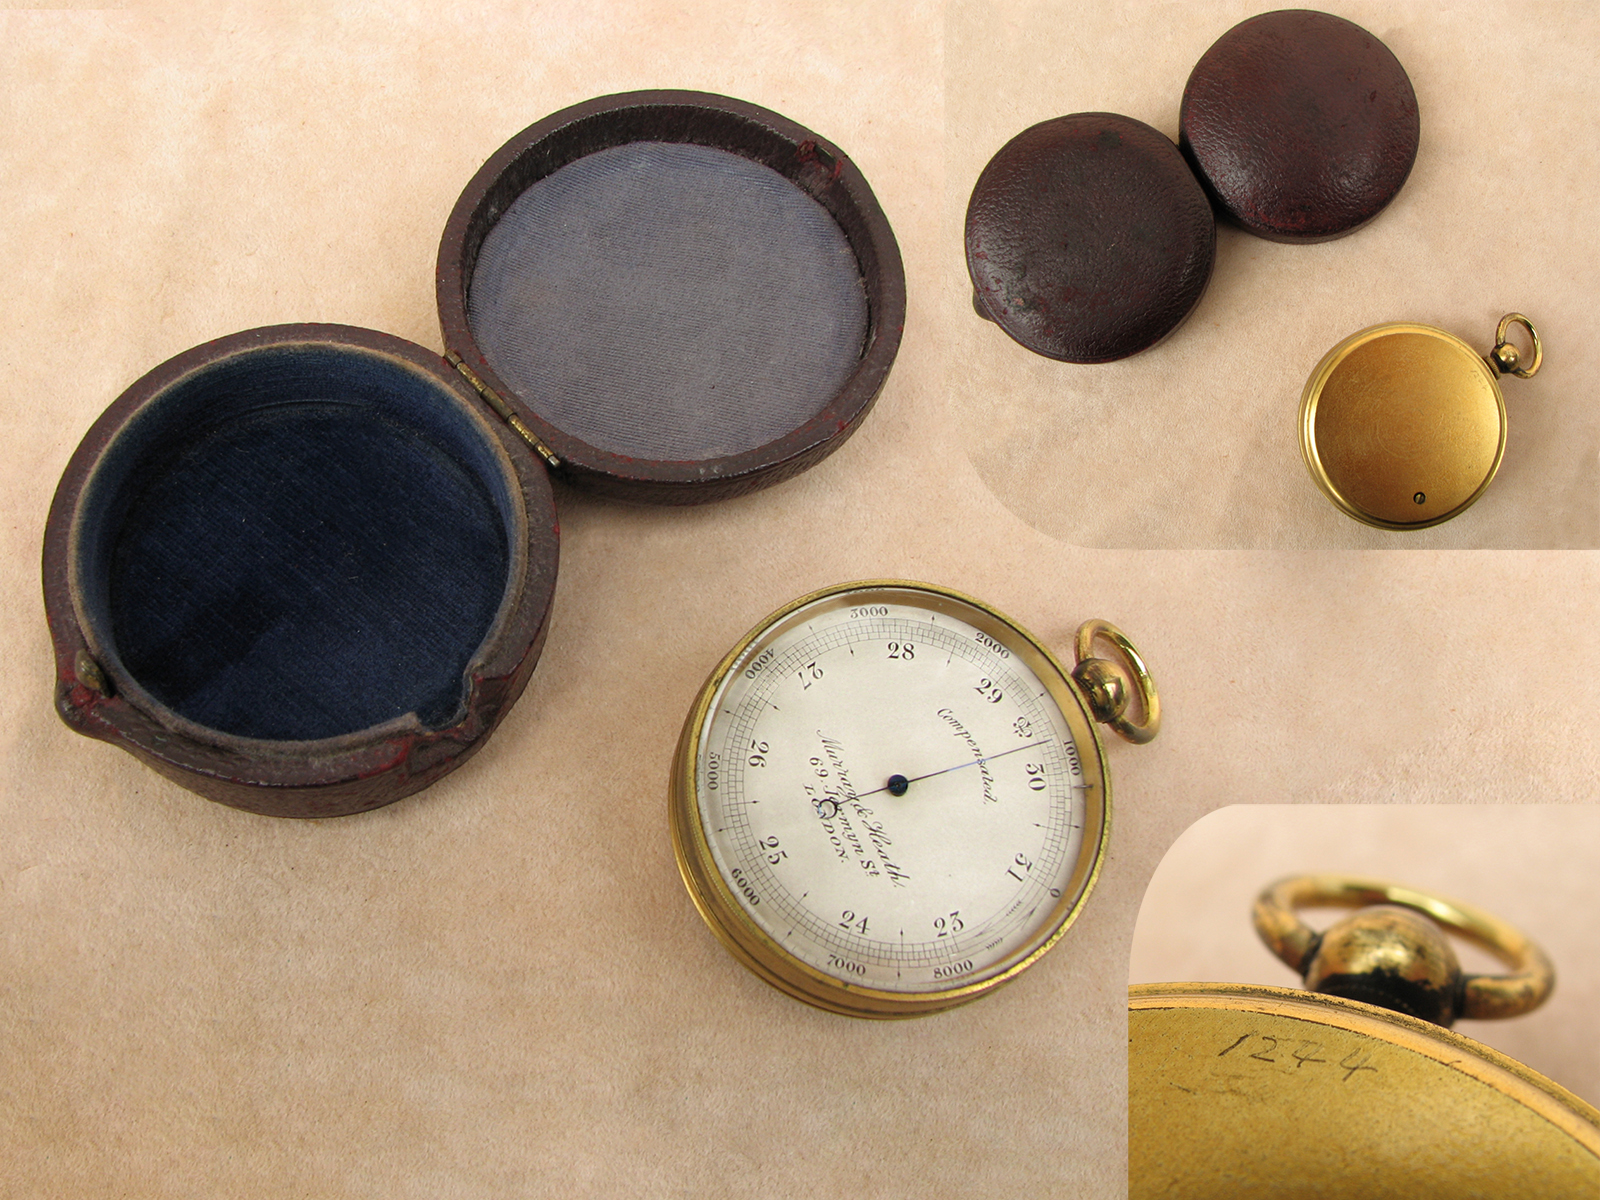 Antique pocket barometer altimeter by Murray & Heath, circa 1870's